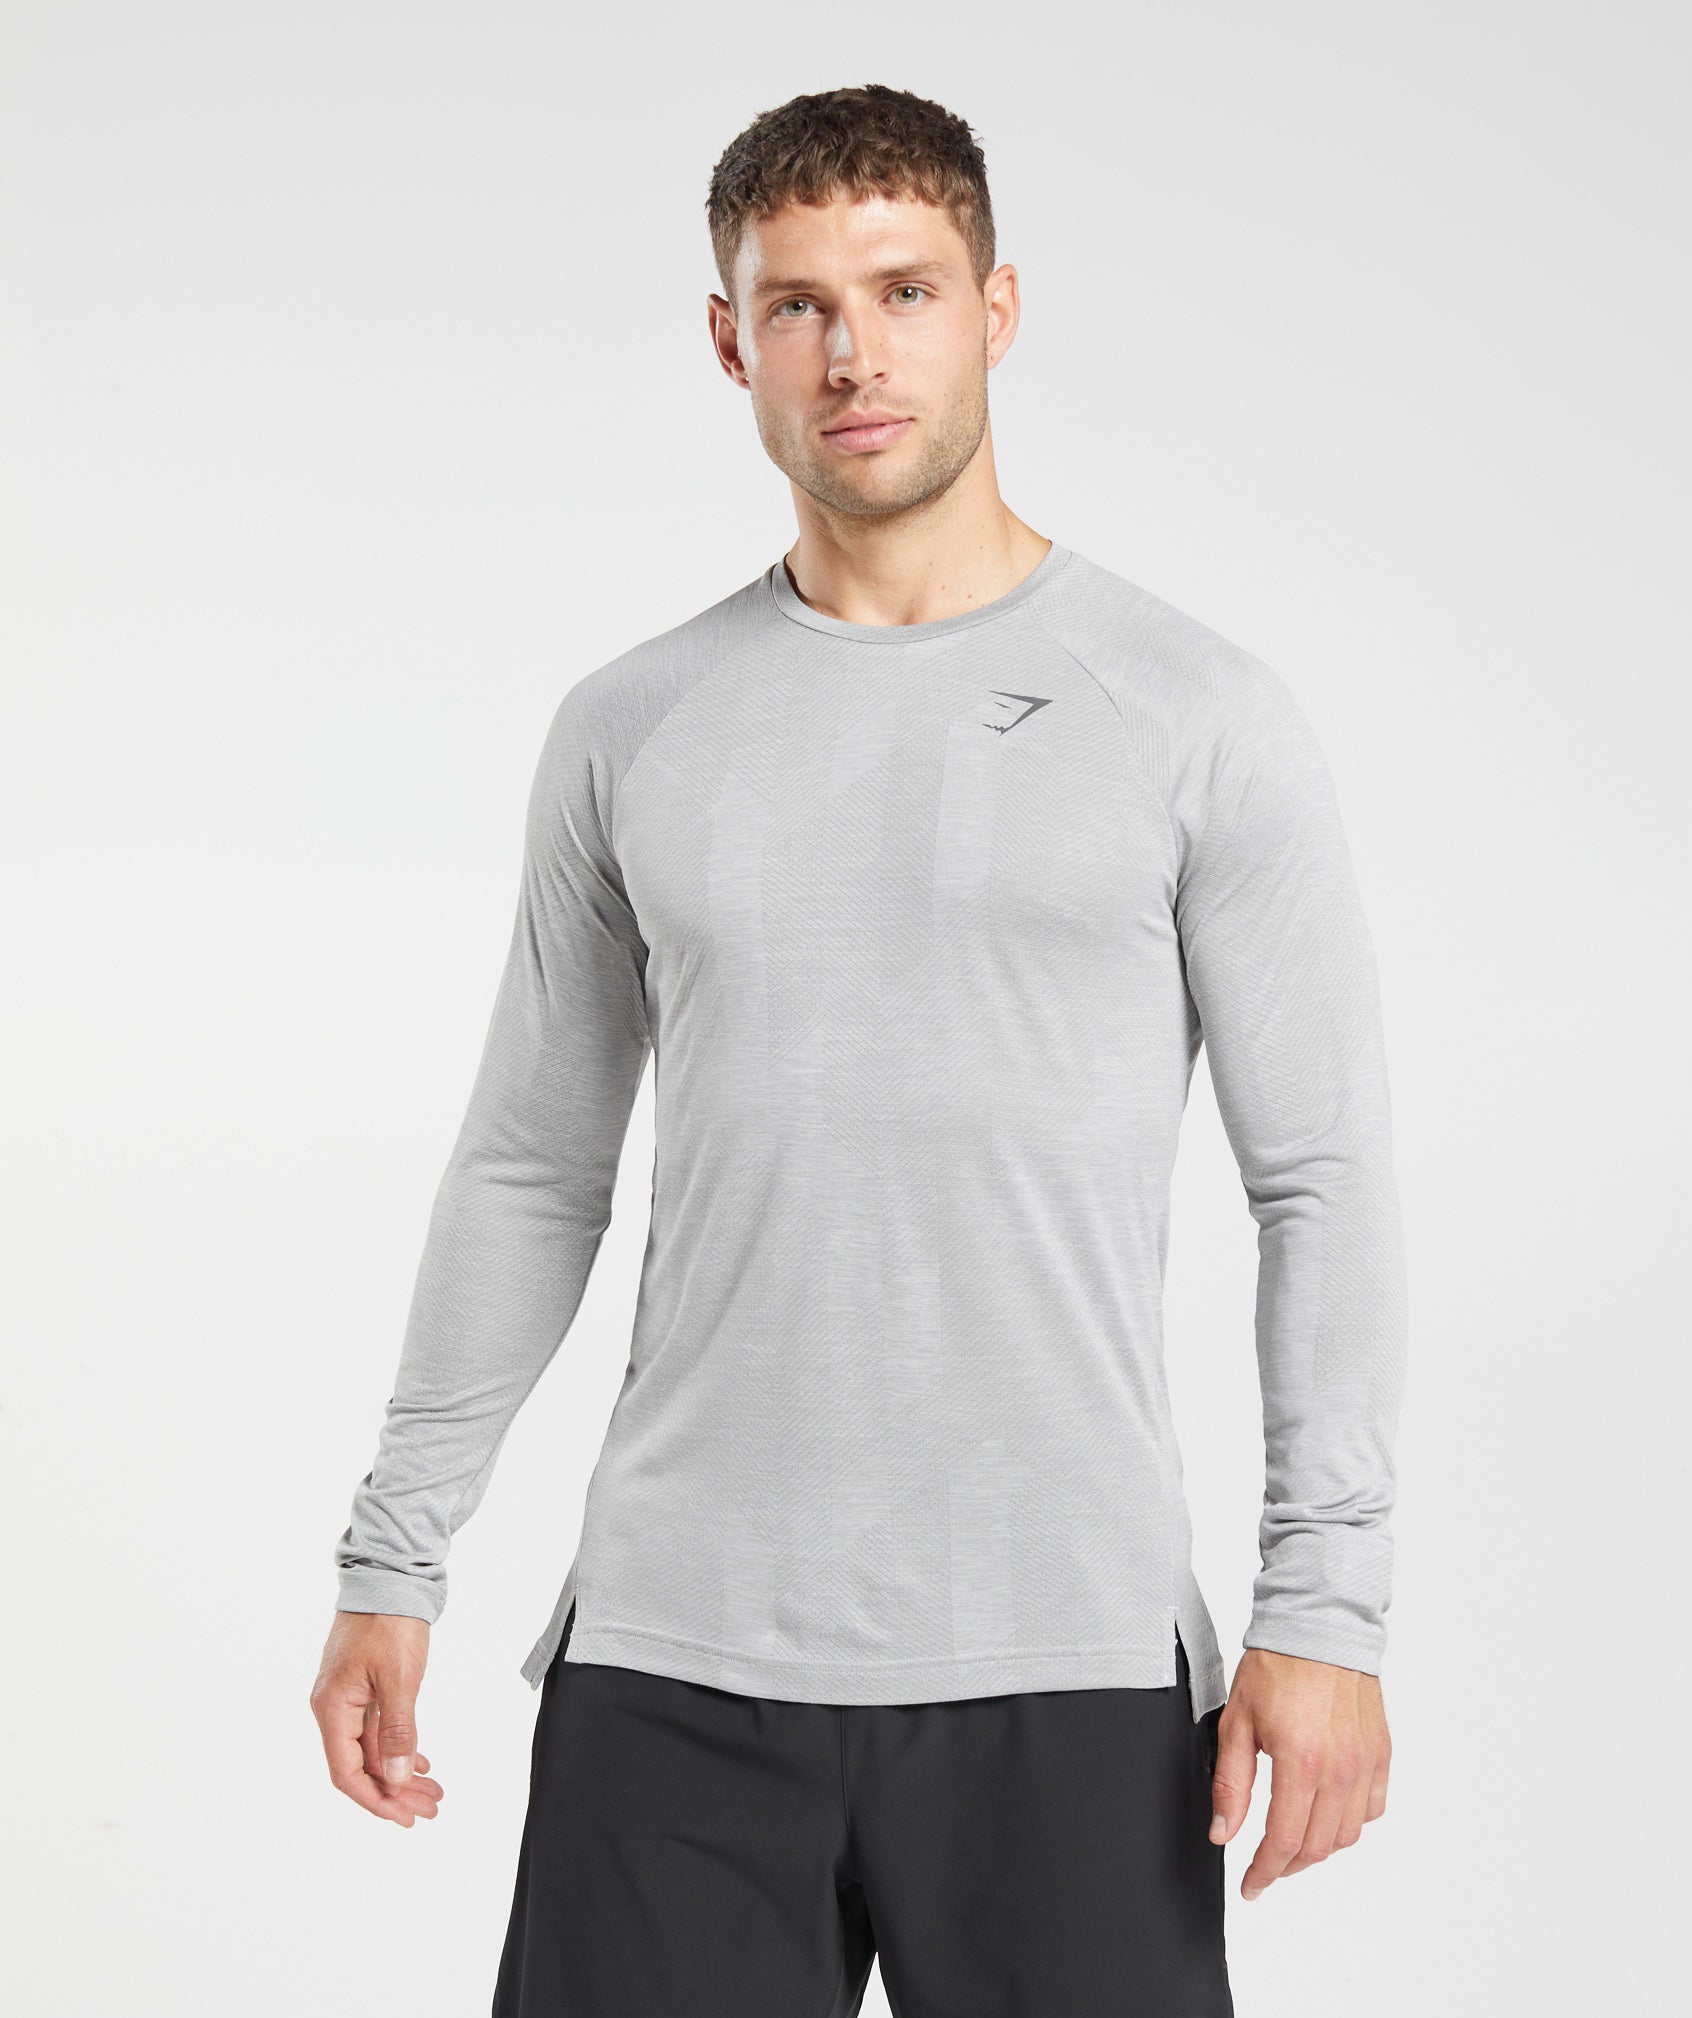 Gymshark Apex Long Sleeve T-Shirt - Light Grey/Smokey Grey | Gymshark